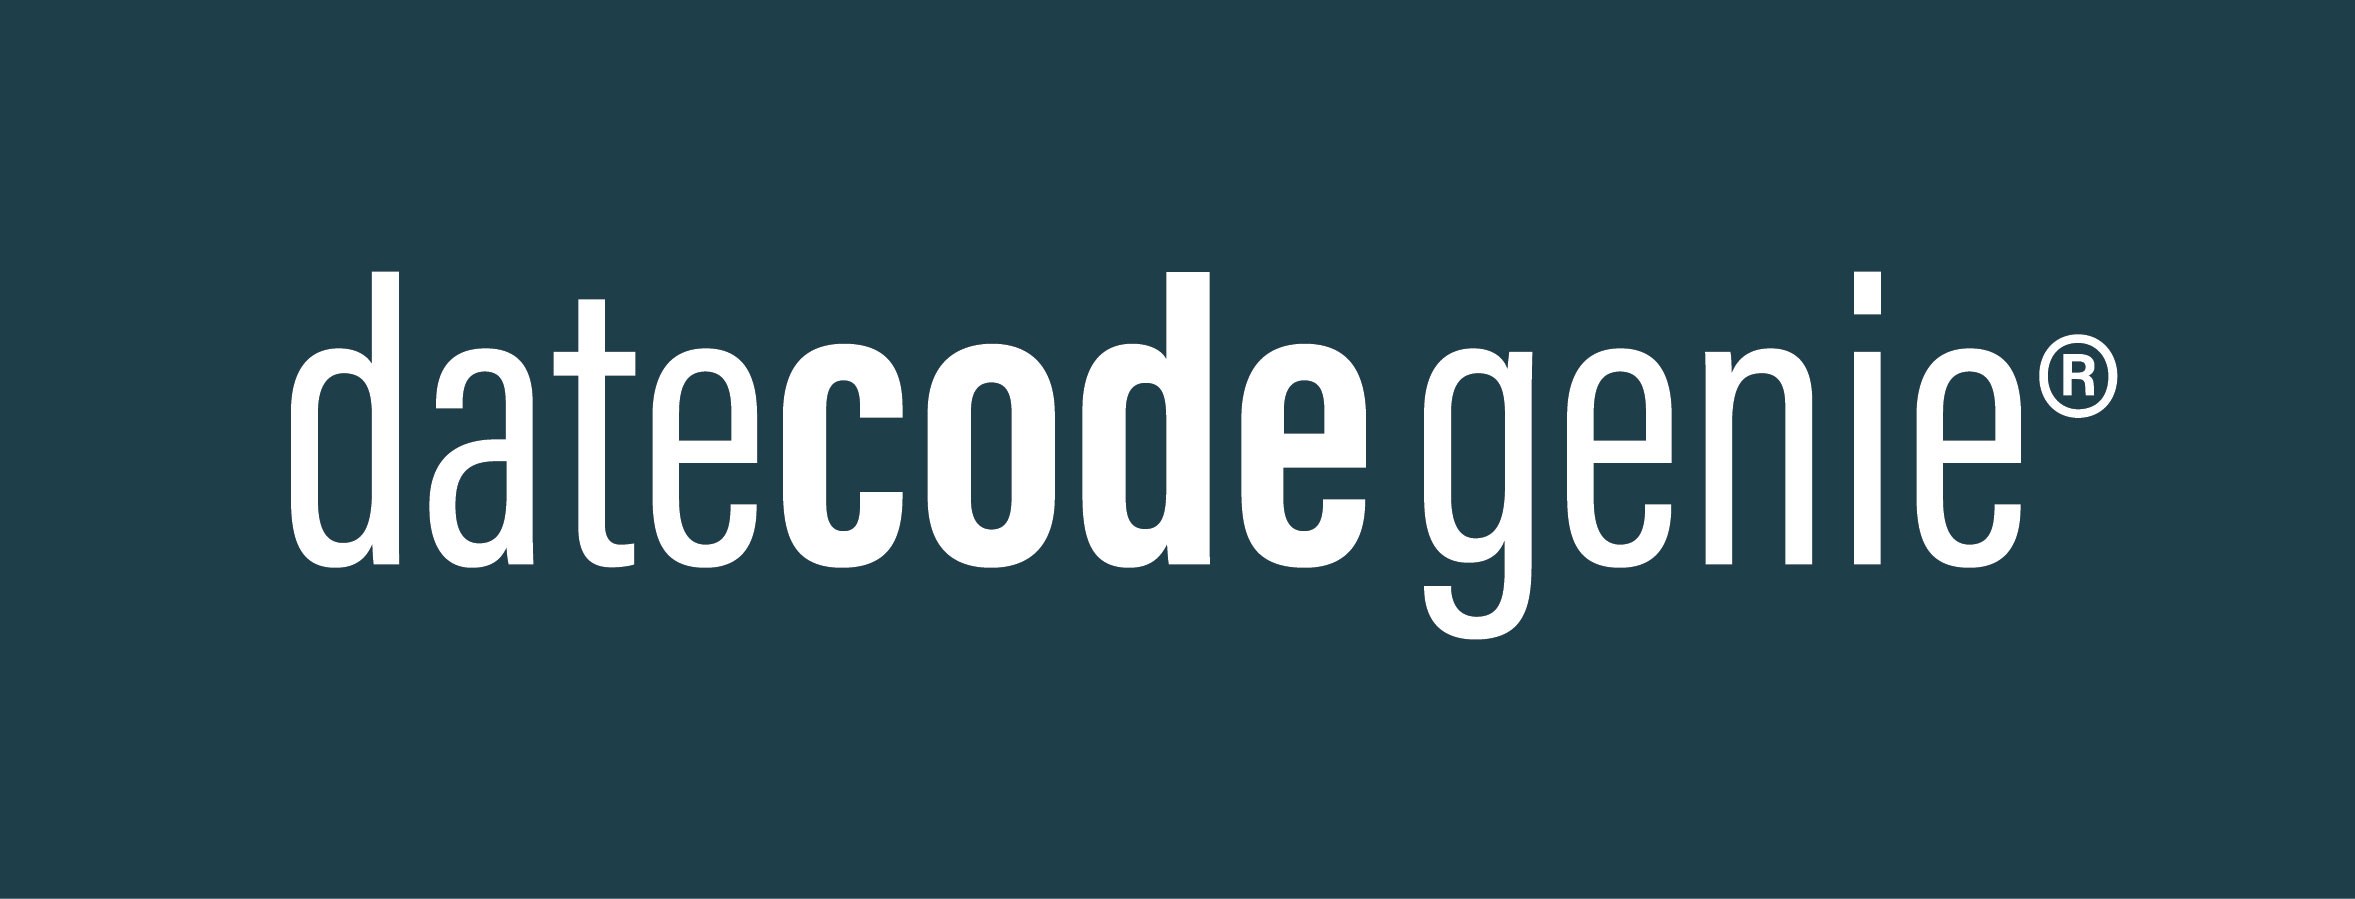 Date Code Genie logo